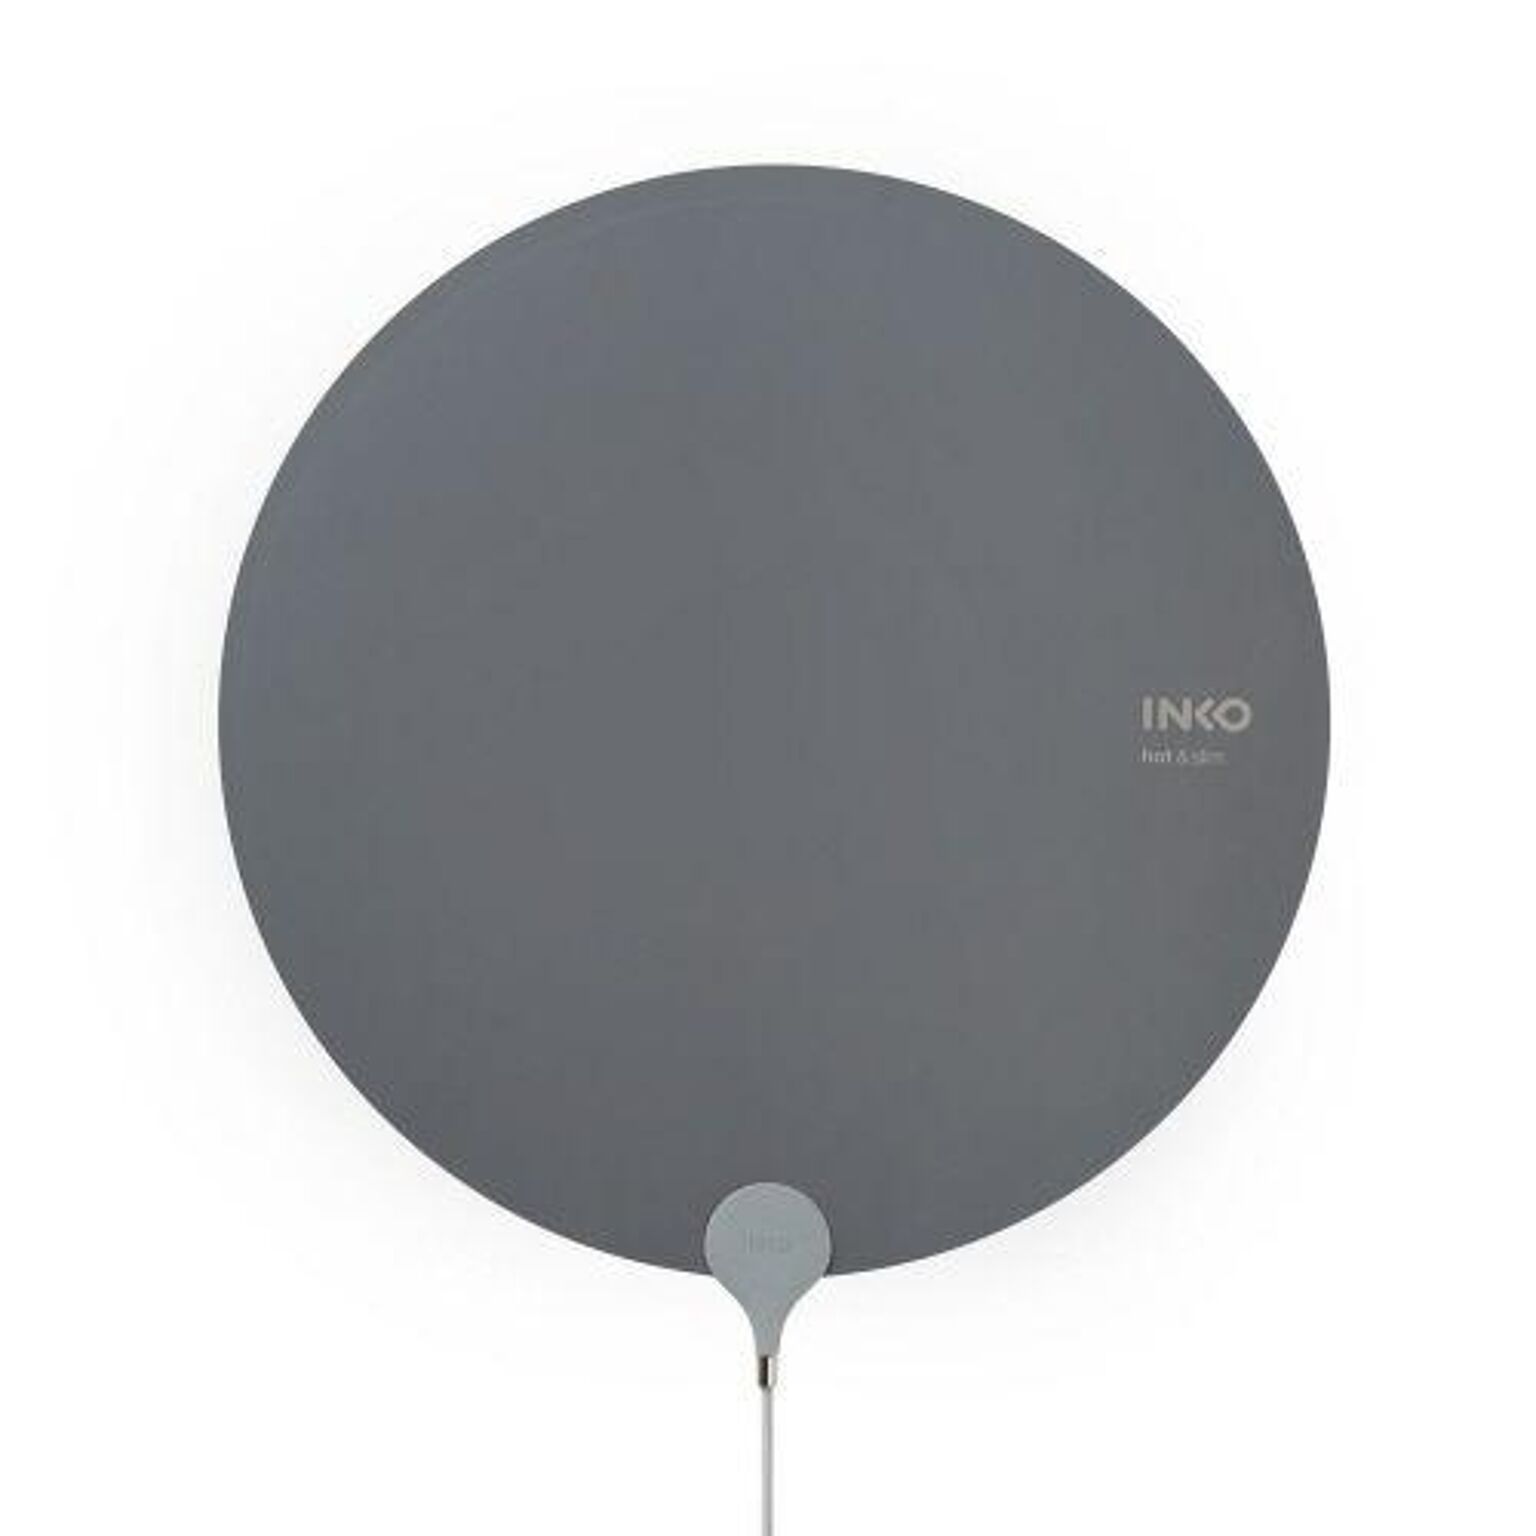 INKO(インコ) INKO Heating Mat Heal グレー IK16401